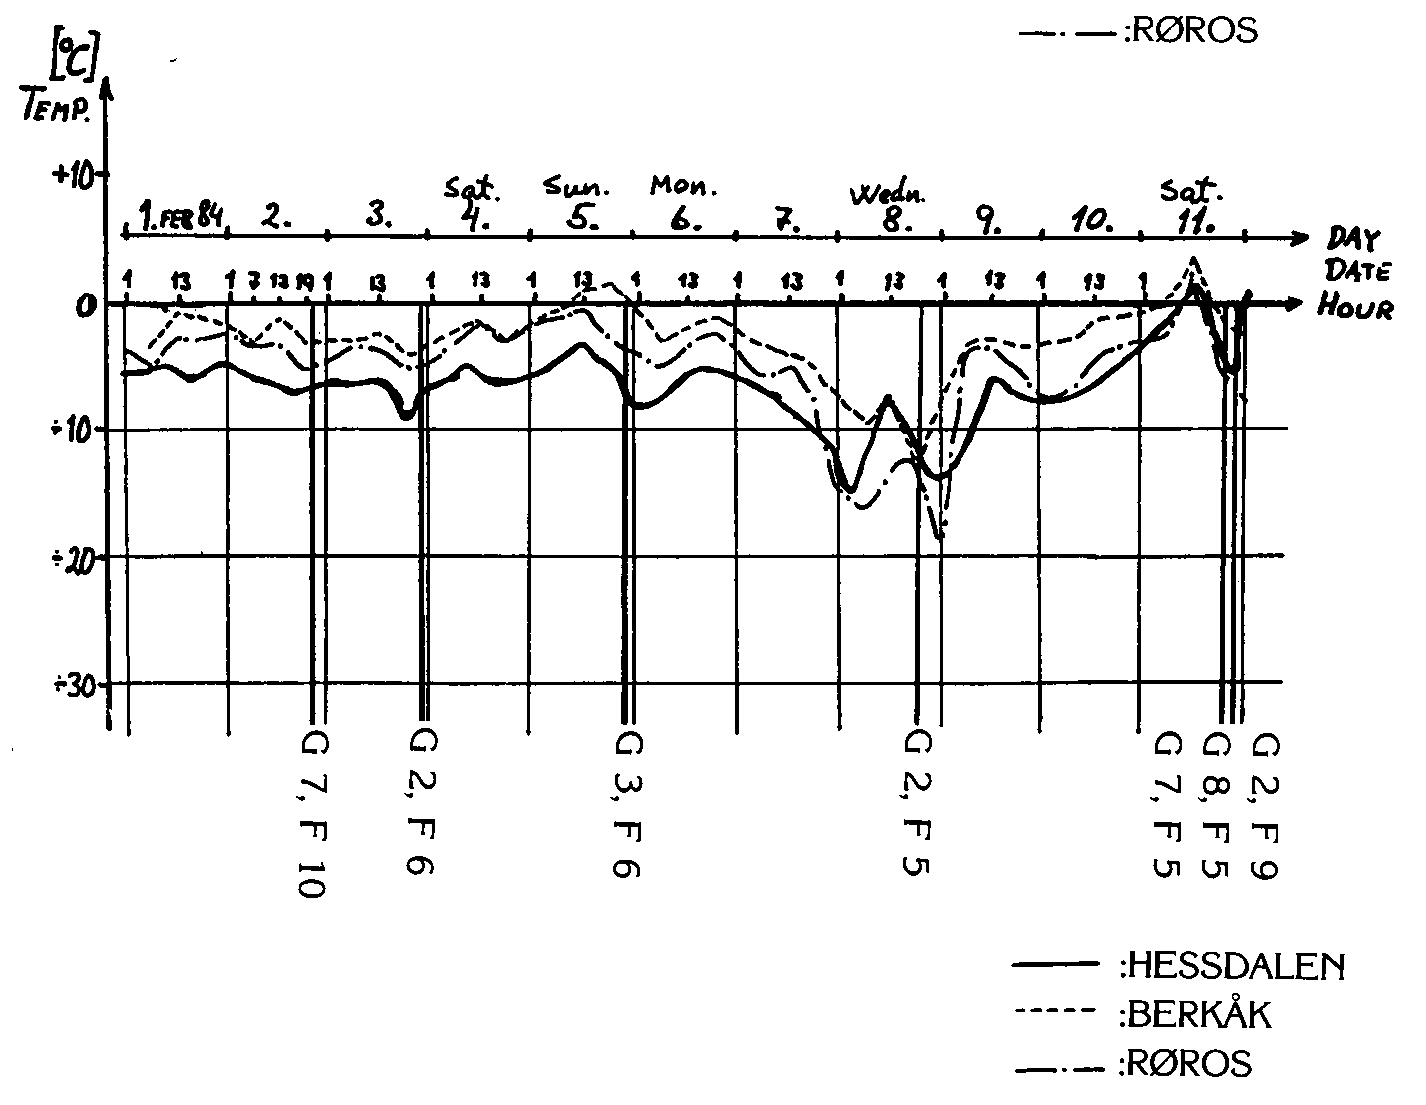 Hessdalen, Temperature diagram 2 (big version)